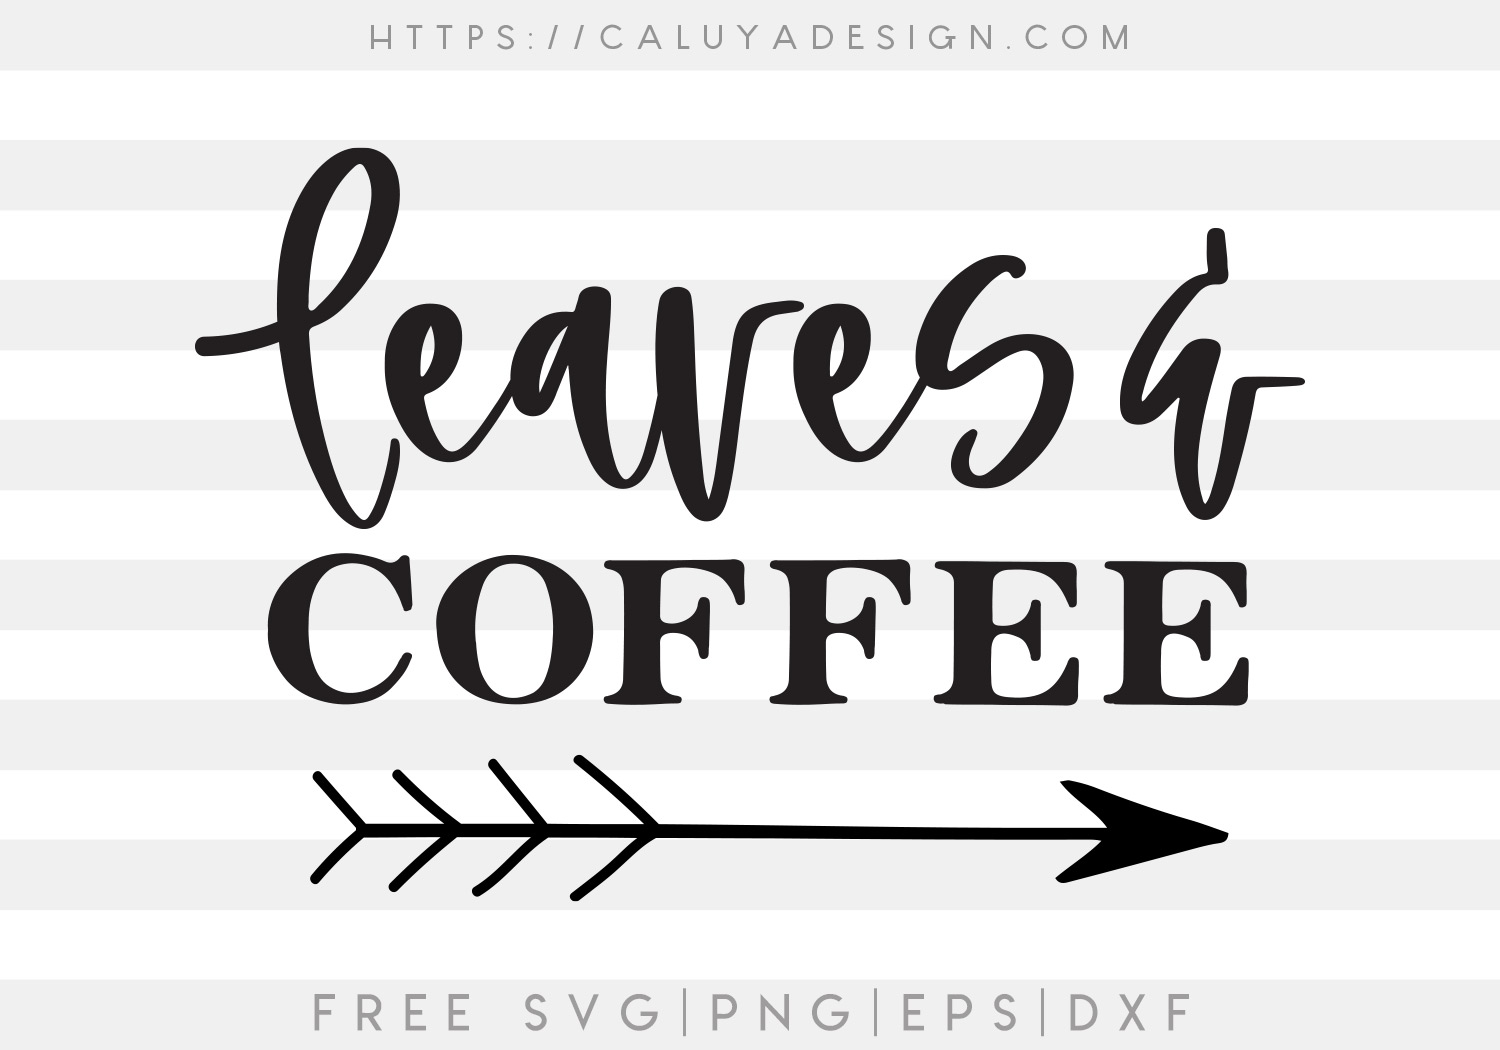 Free Leaves & Coffee SVG Cut File